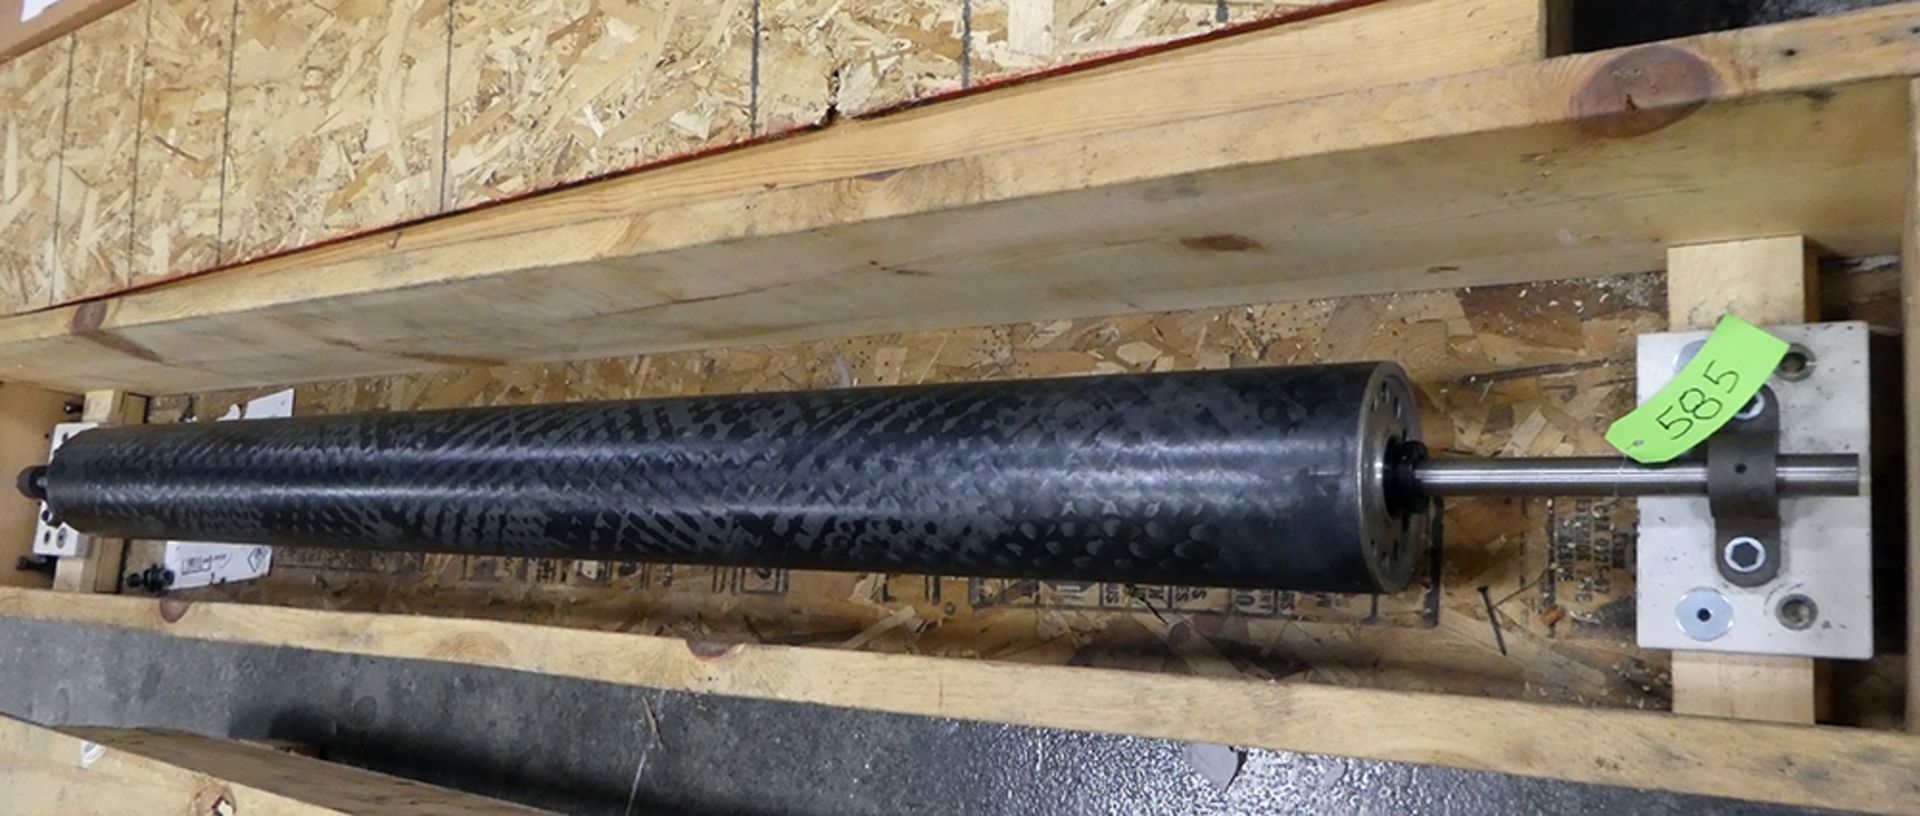 70" x 6.5" Diameter Carbon Fiber Idler Roll